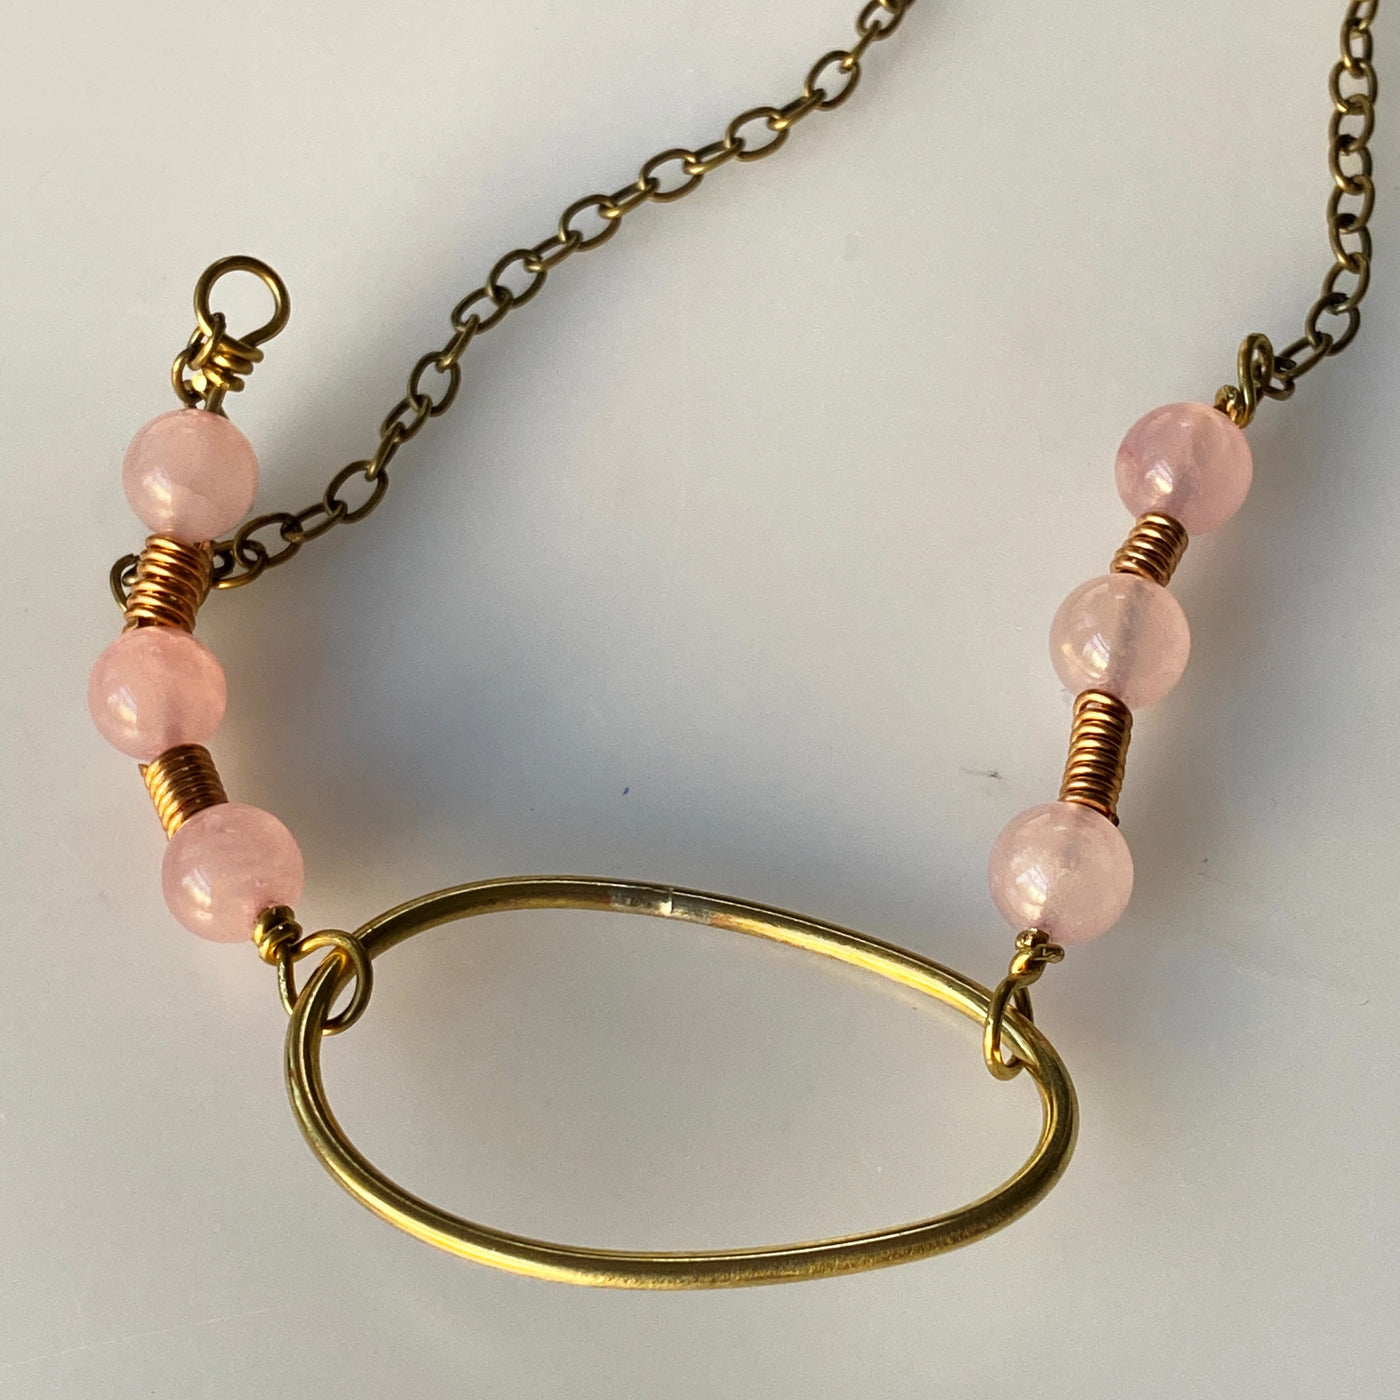 Rose quartz and copper oval necklace.